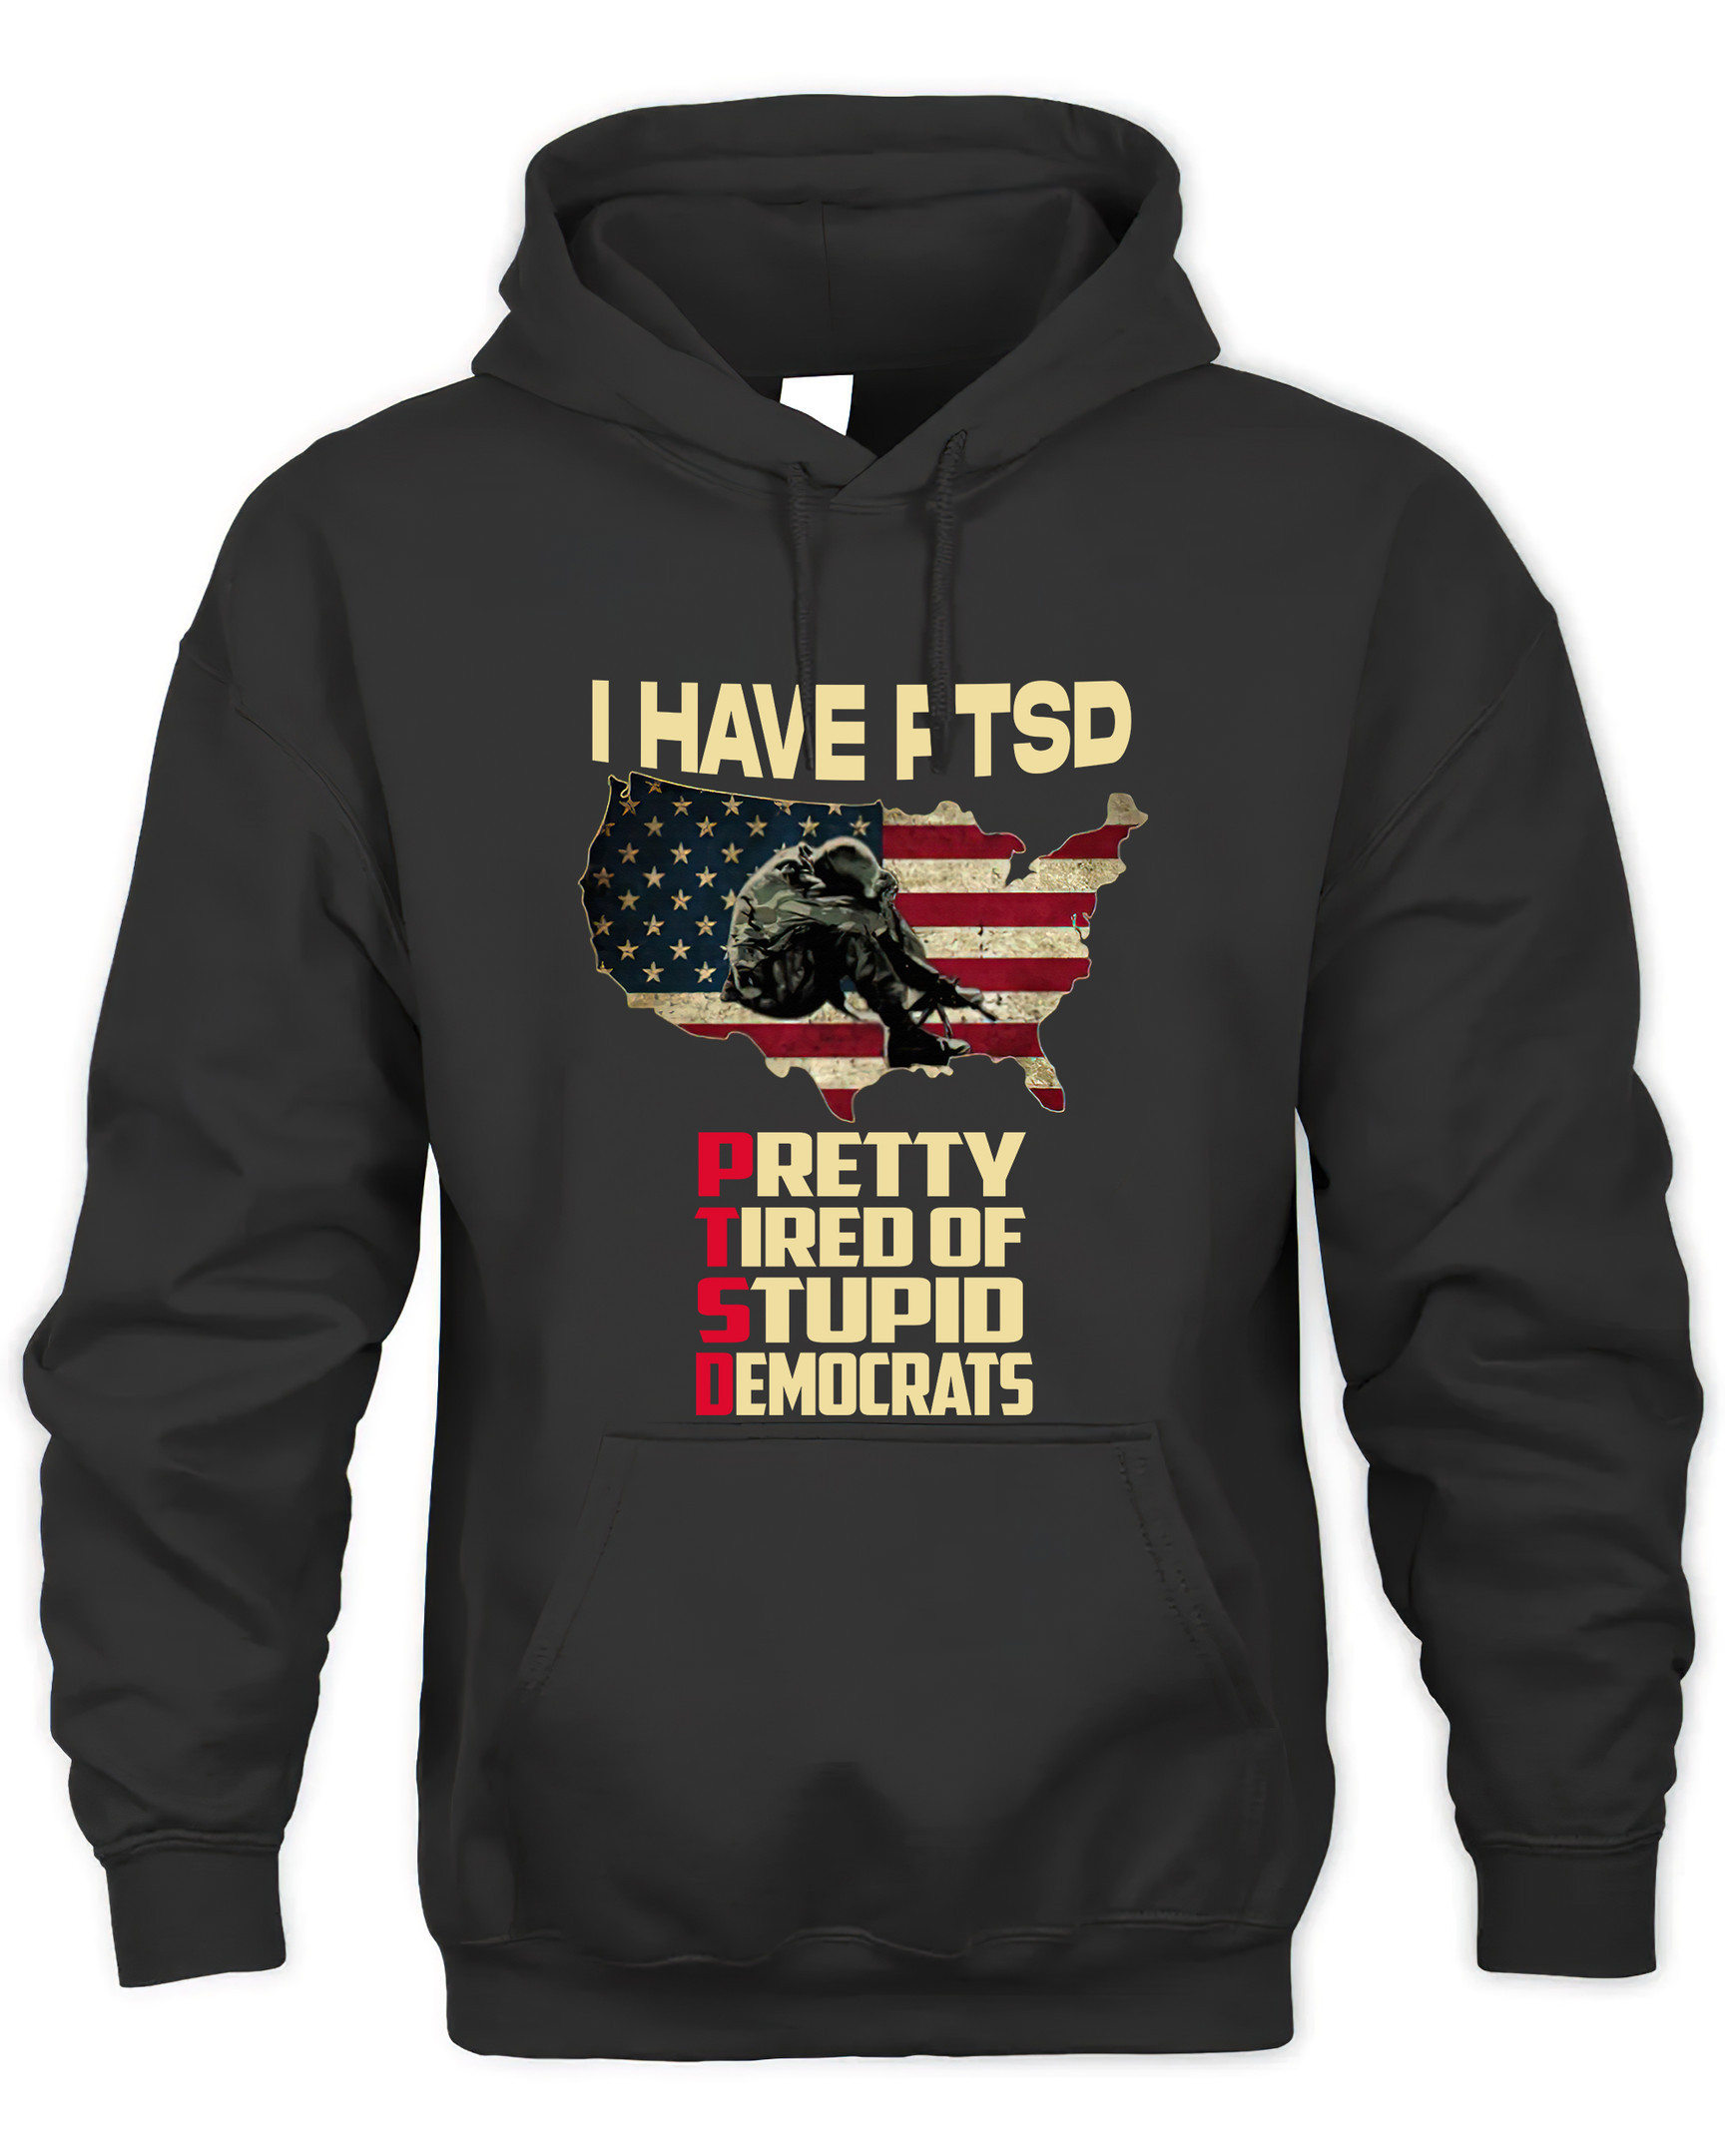 I Have PTSD Pretty Tired Of Stupid Democrats, 2D Tshirt